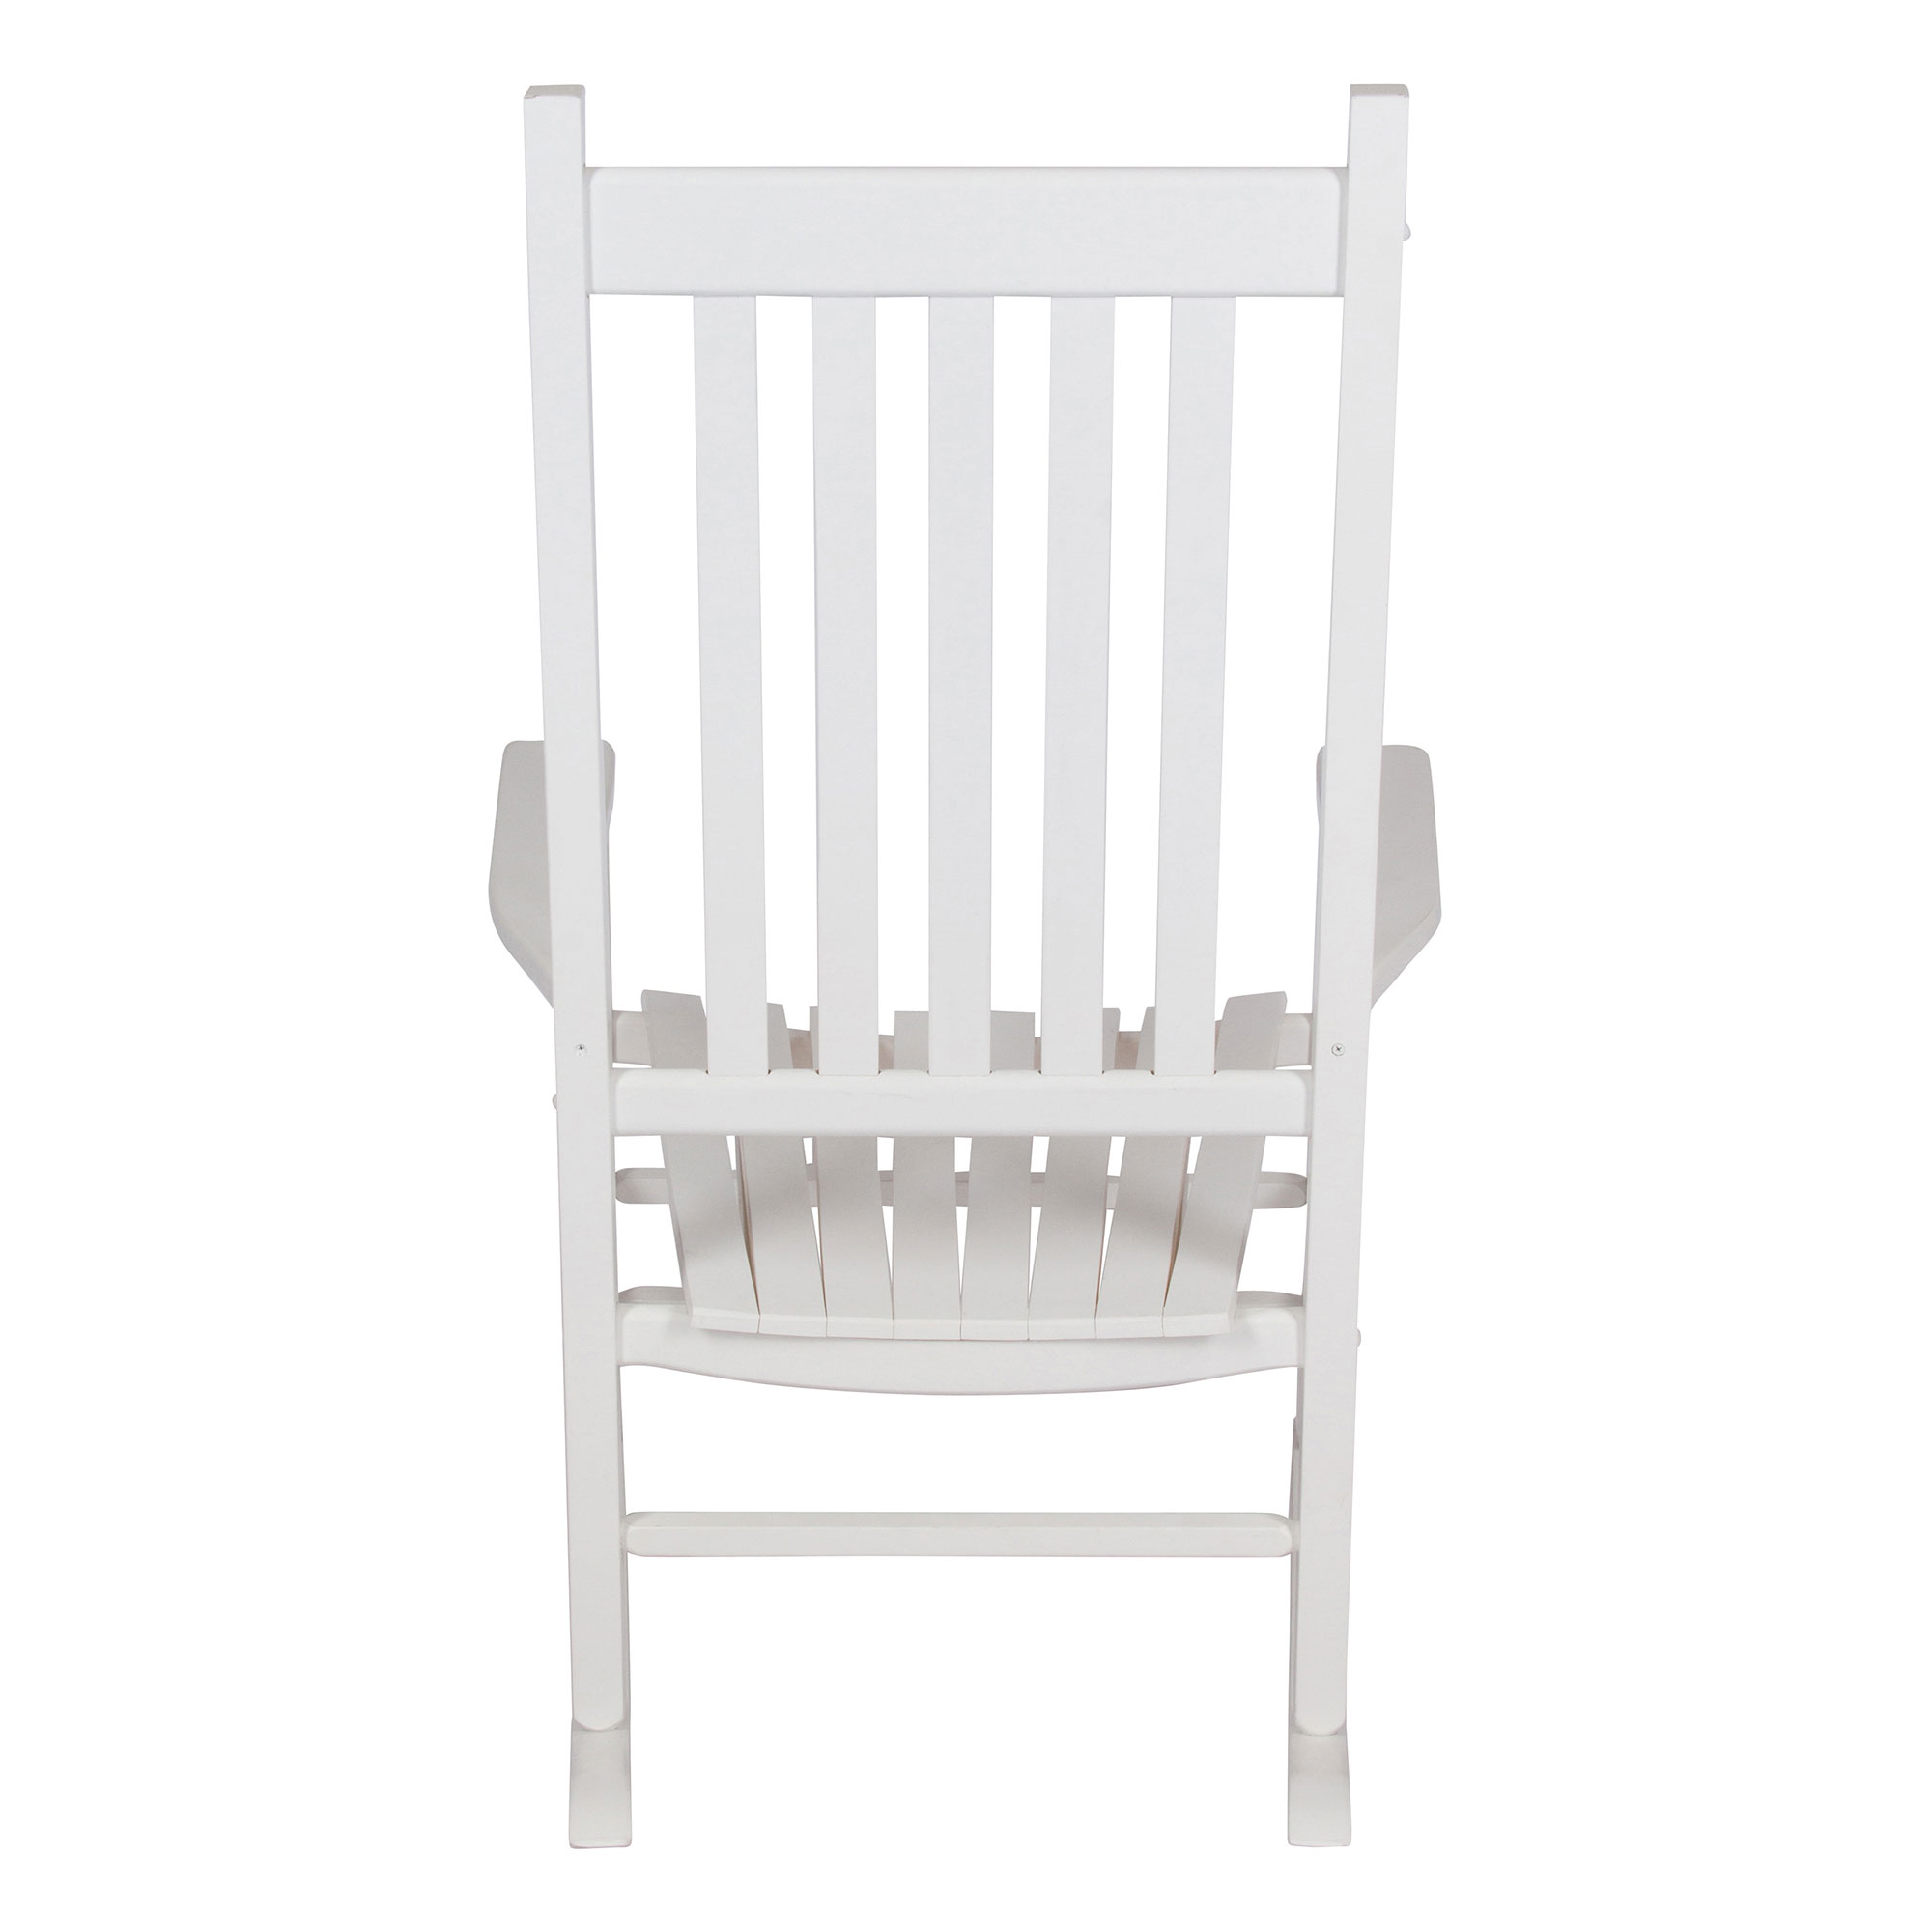 Shine Company Vermont Hardwood Porch Patio Furniture Rocker Chair, White (Used) | eBay